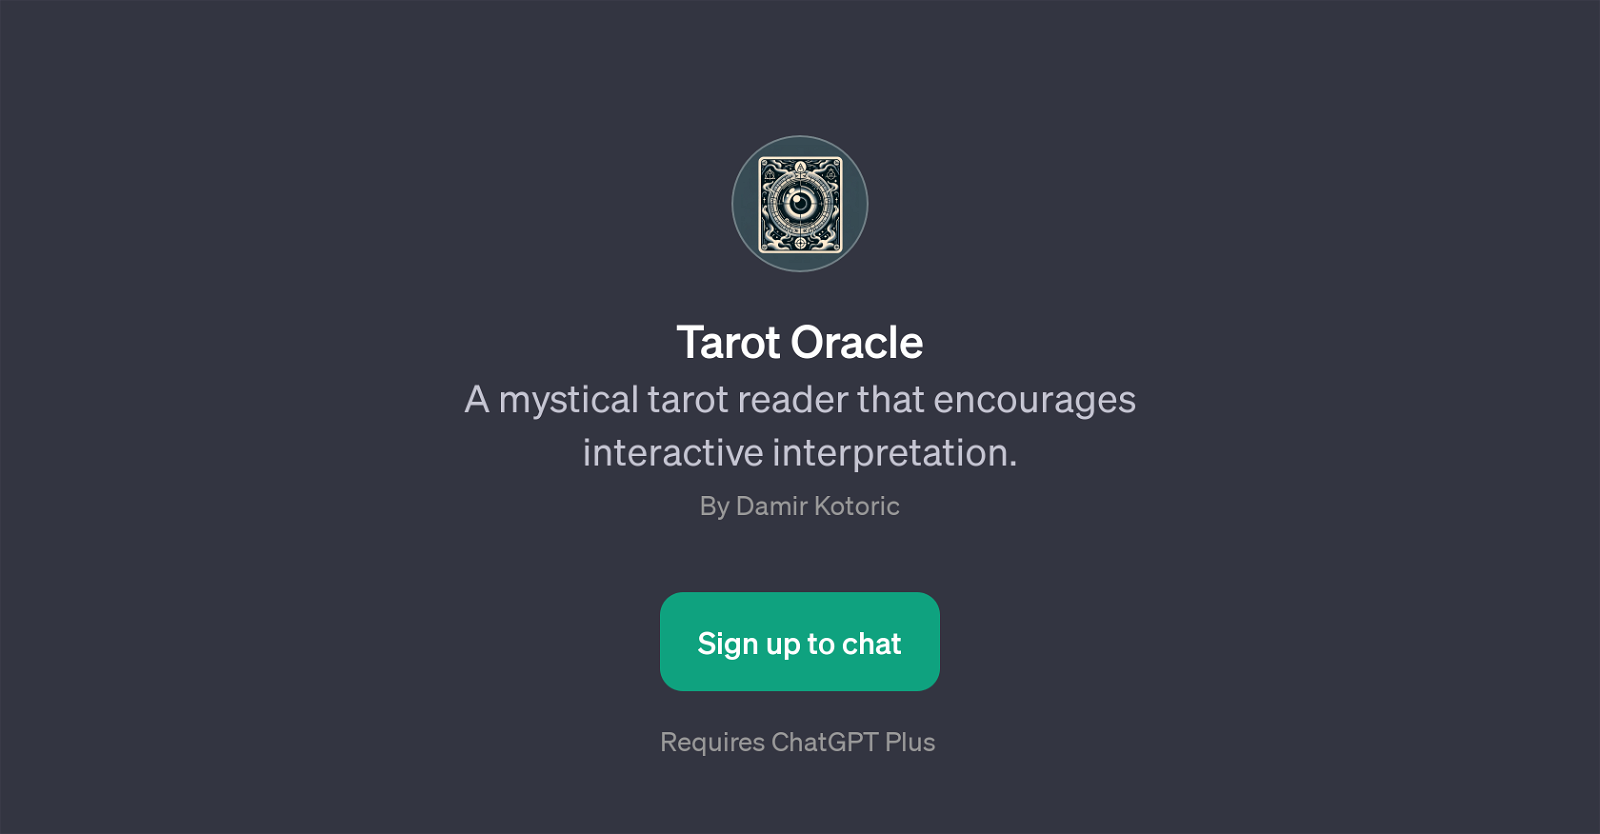 Tarot Oracle website